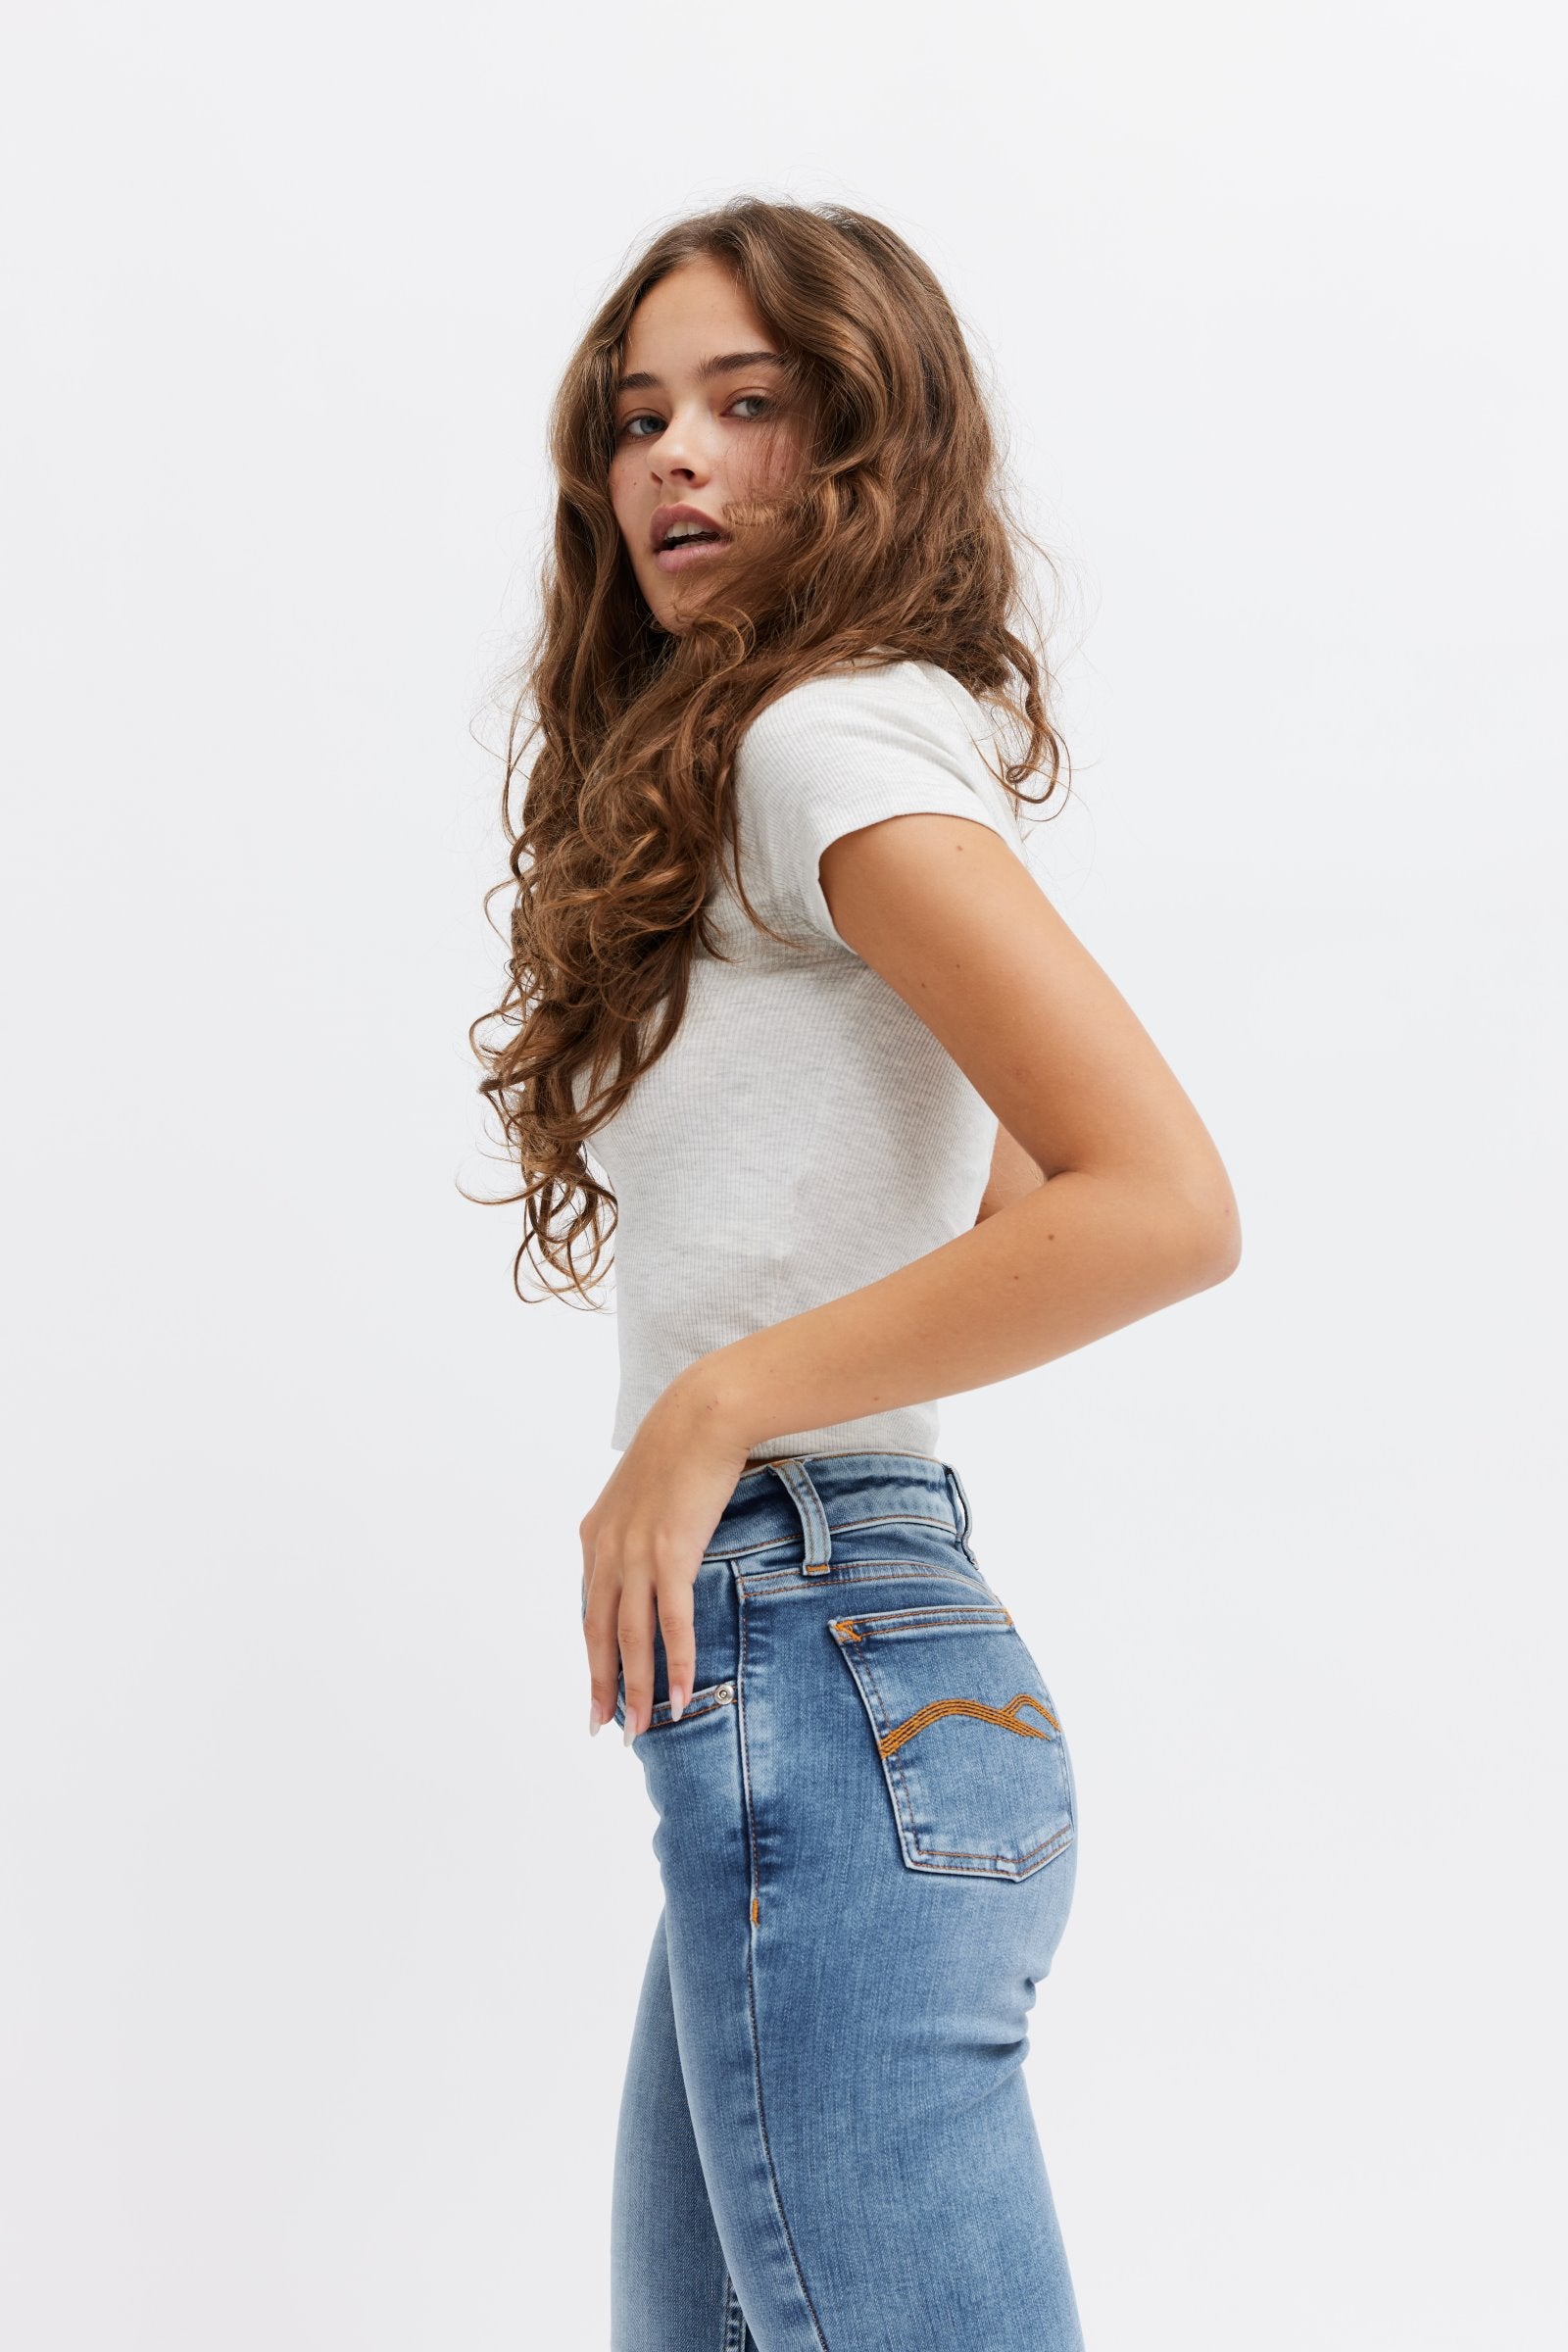 Nordic Swan Ecolabel Jeans - Organic GOTS cotton Jeans